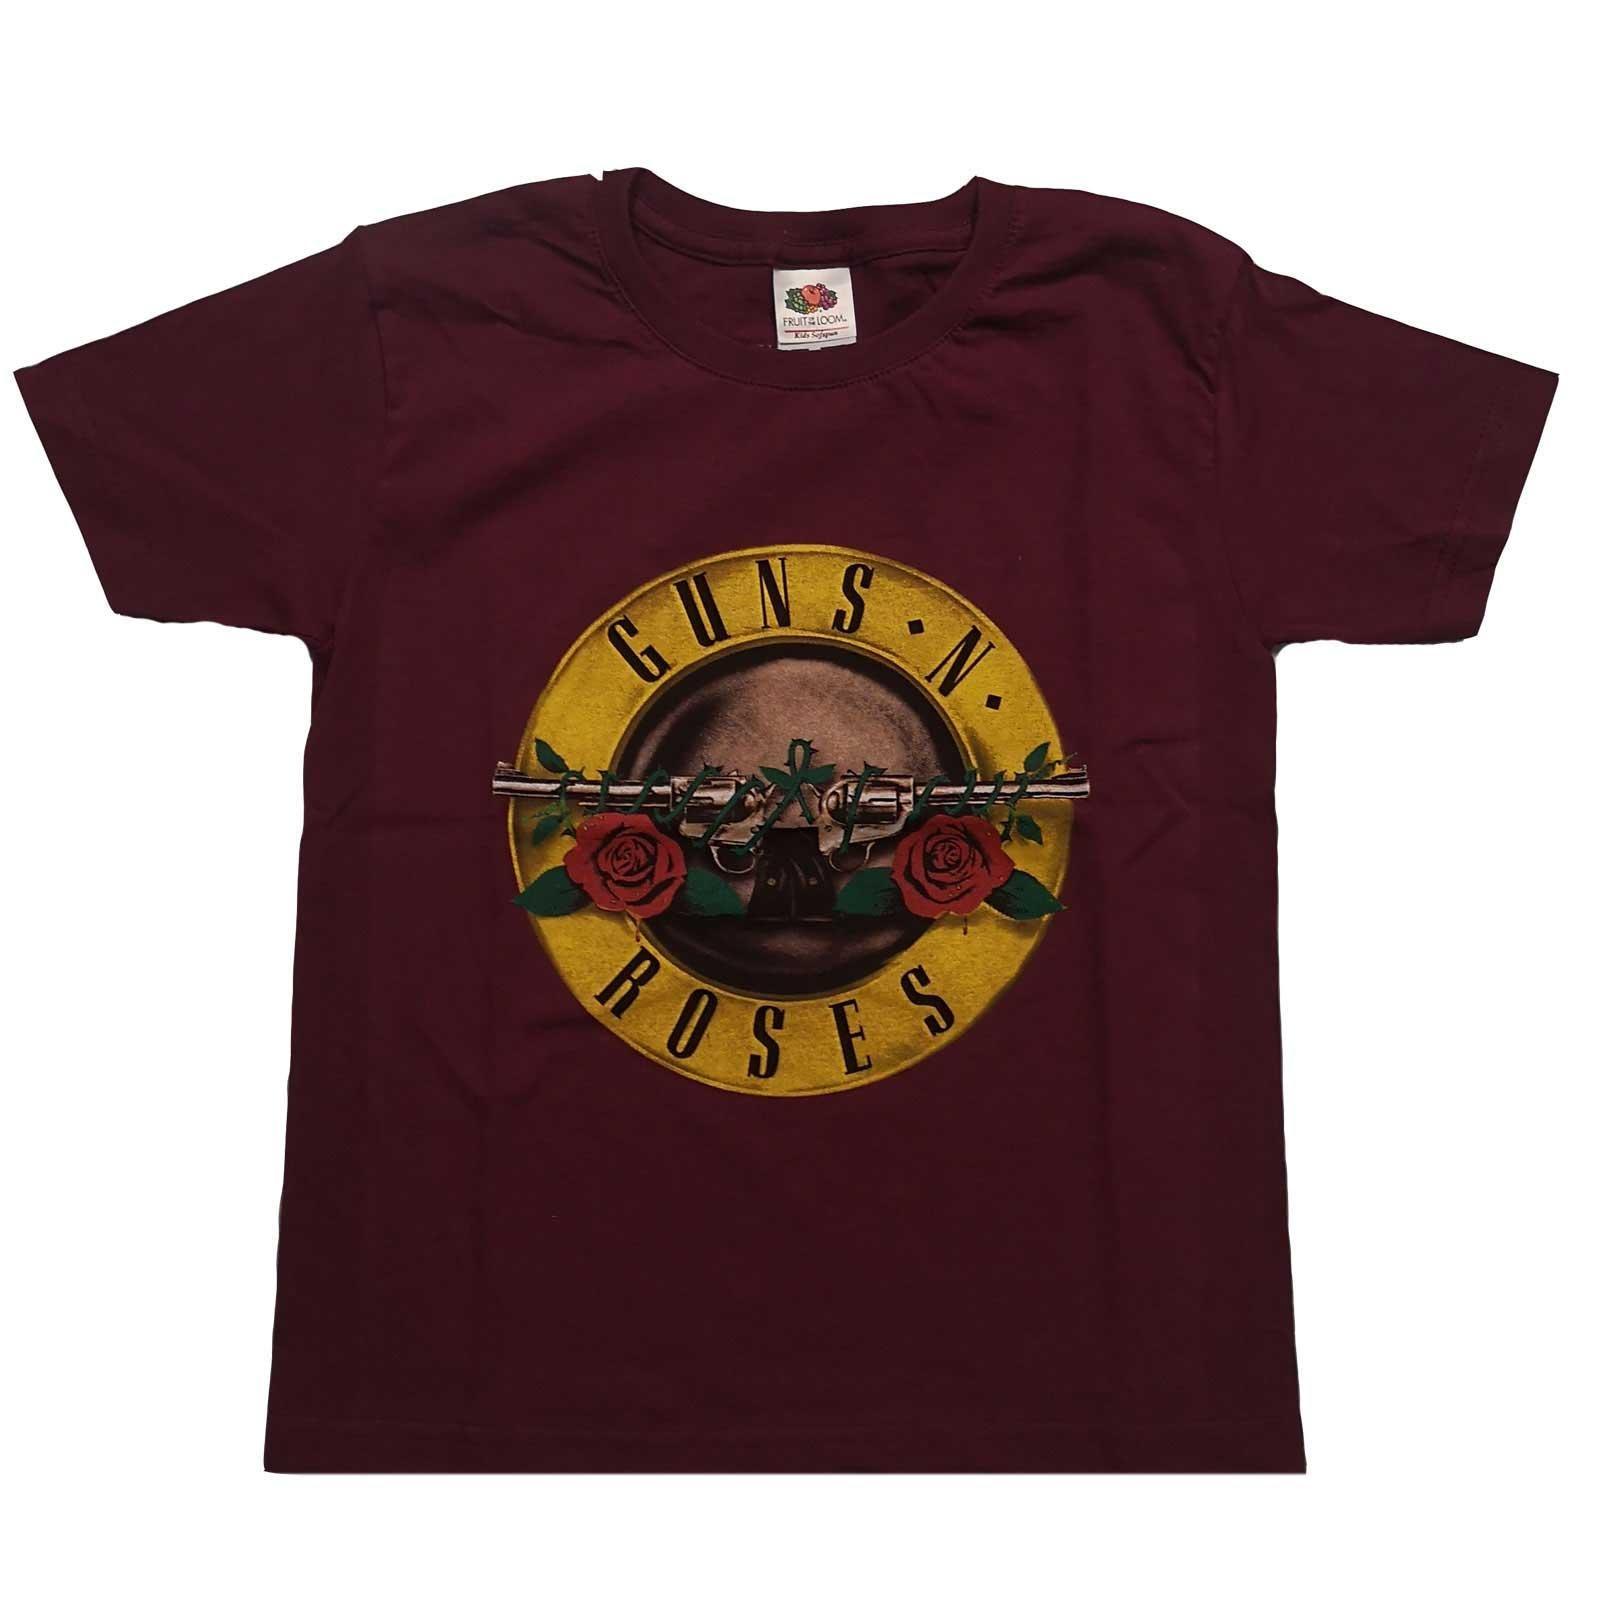 Tshirt Jungen Bordeaux 116 von Guns N Roses